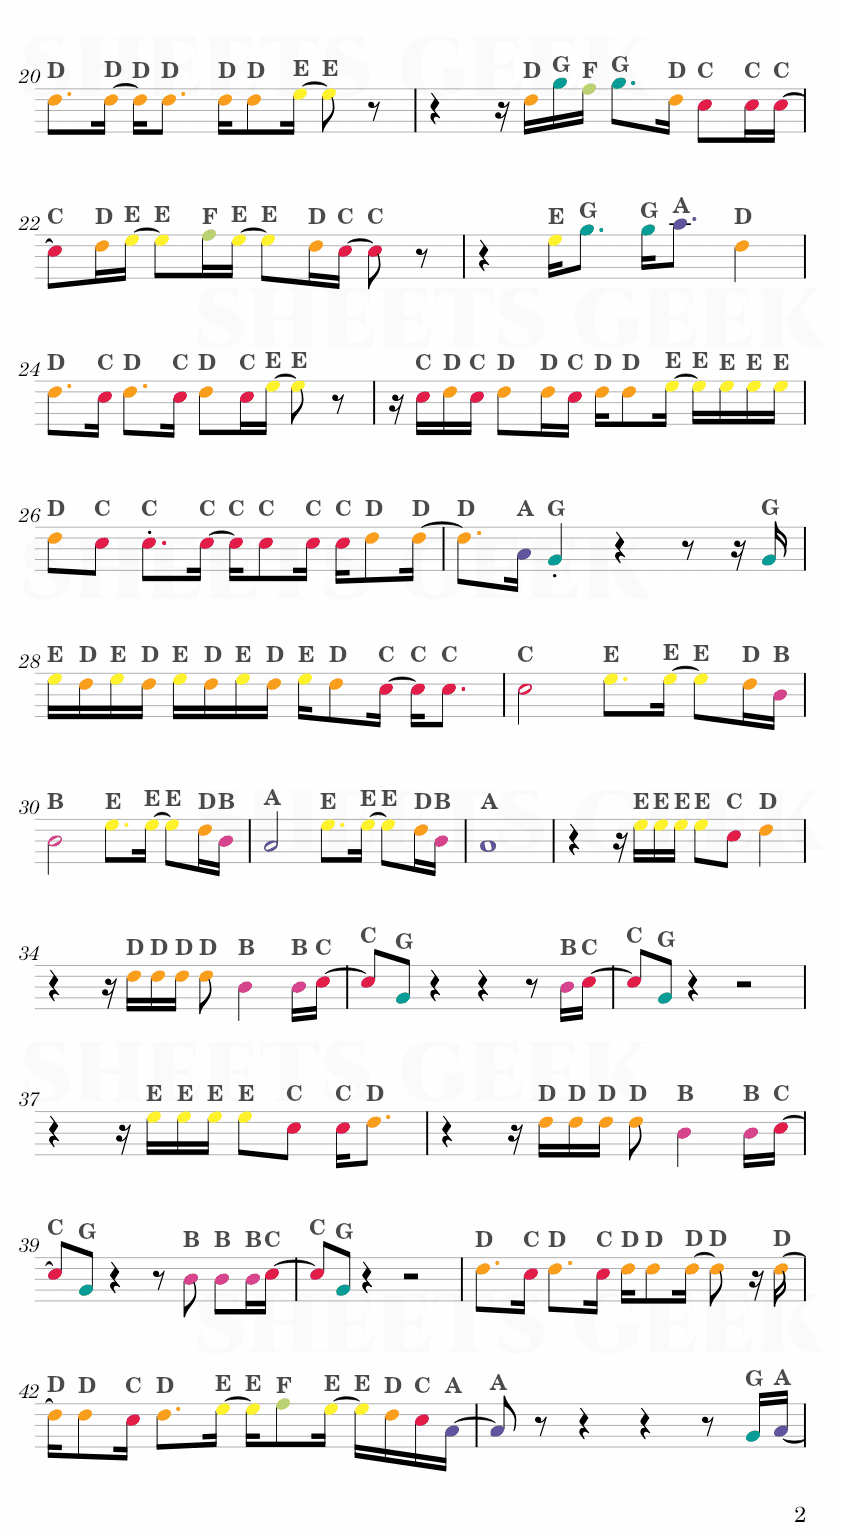 Overpass Graffiti - Ed Sheeran Easy Sheet Music Free for piano, keyboard, flute, violin, sax, cello page 2